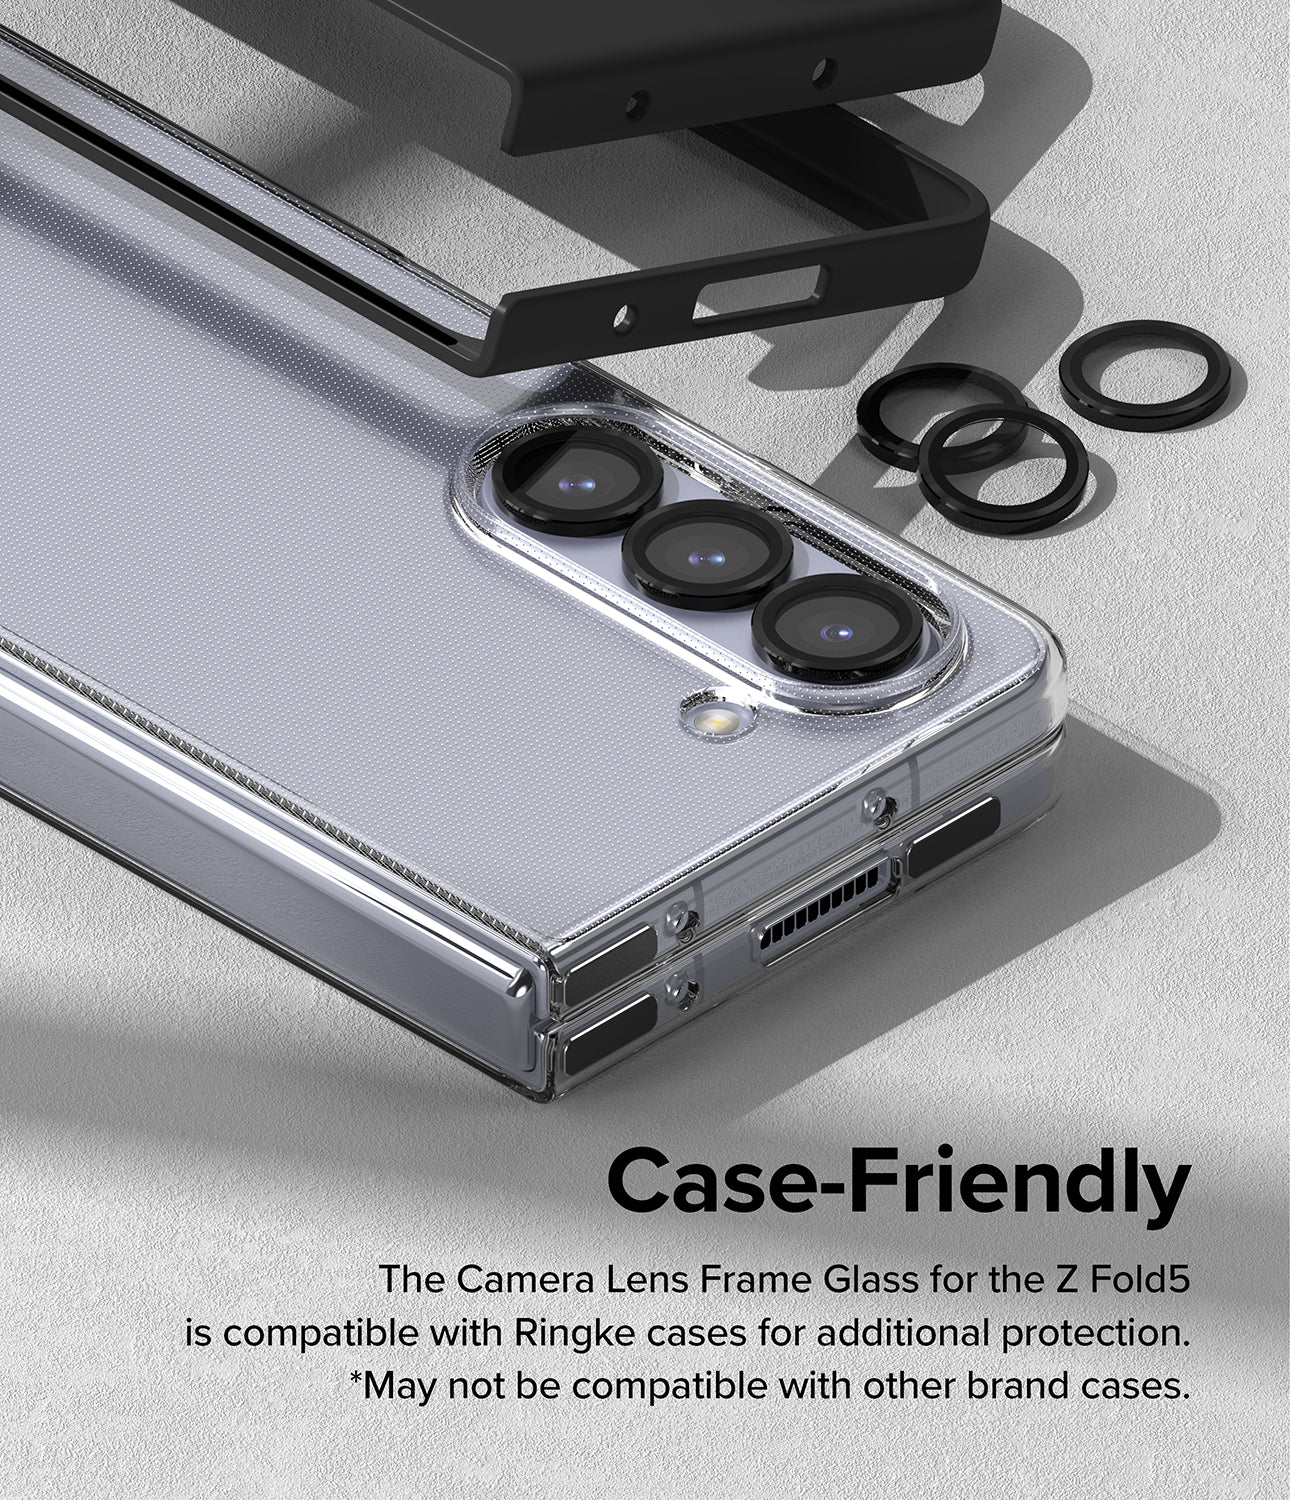 Galaxy Z Fold 5 | Camera Lens Frame Glass